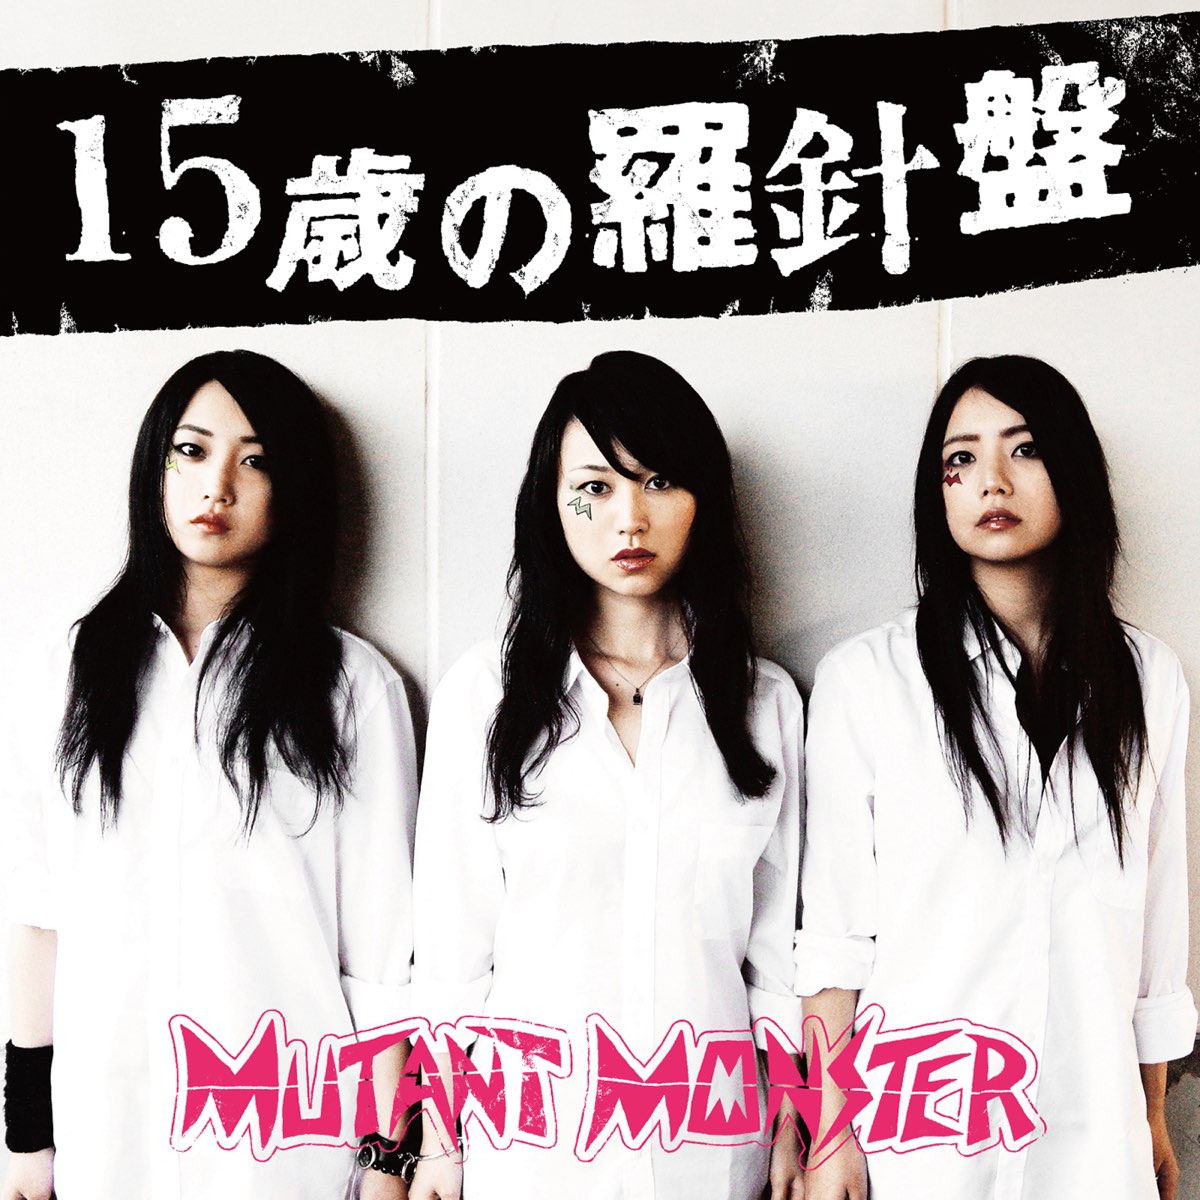 Mutant Monster группа. Monster песня японская. She monster песня